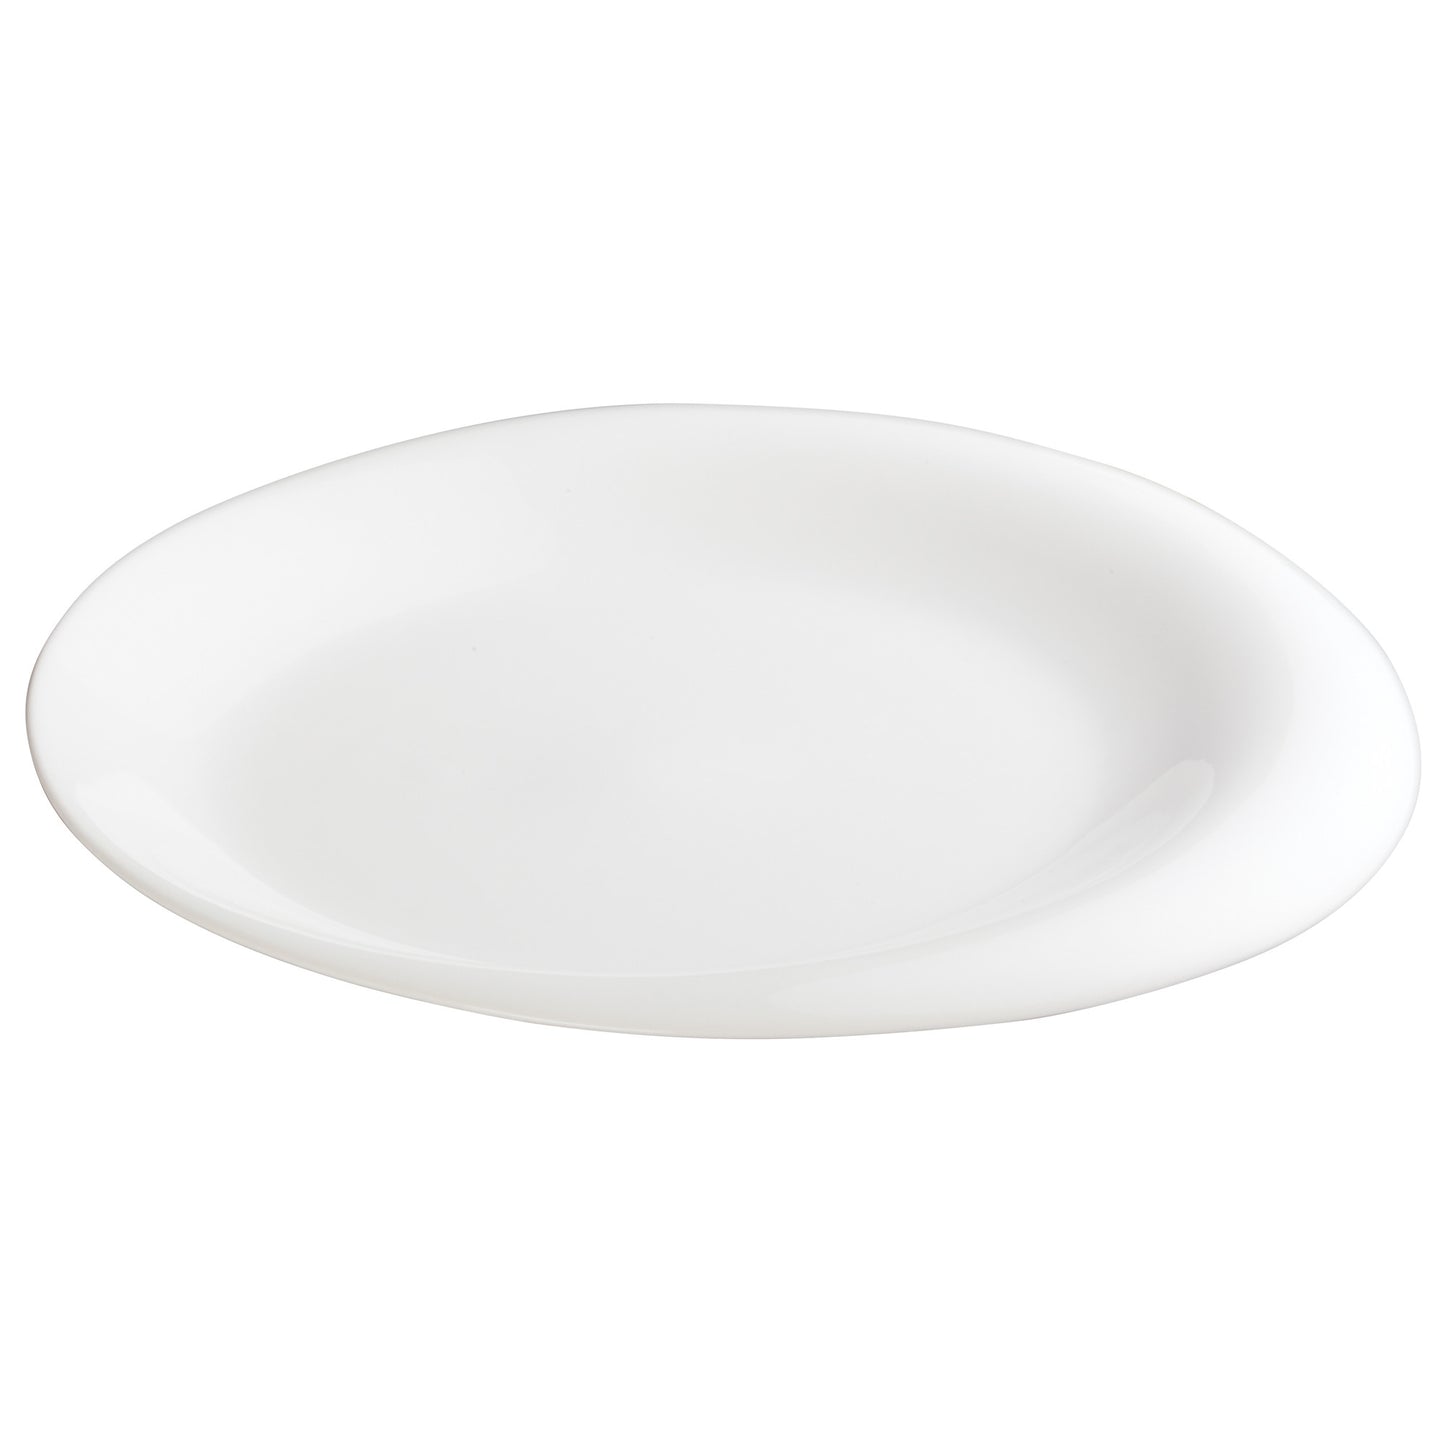 WDP004-202 - 10"Dia. Porcelain Round Plate, Creamy White, 24 pcs/case